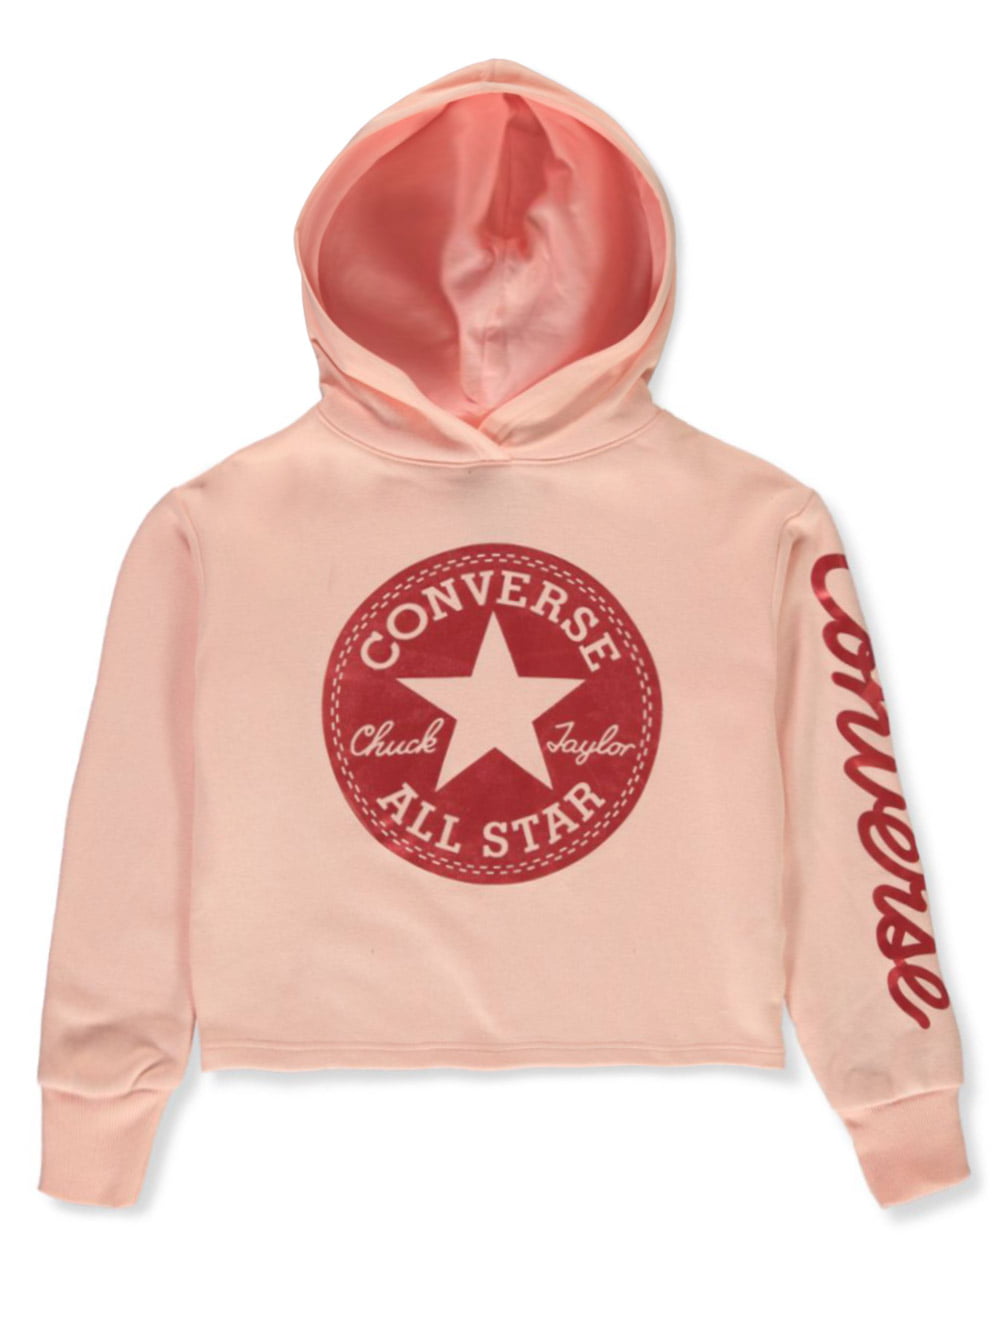 ensayo tensión alfiler Converse Girls' Metallic Hoodie - pink, 10 - 12 (Big Girls) - Walmart.com